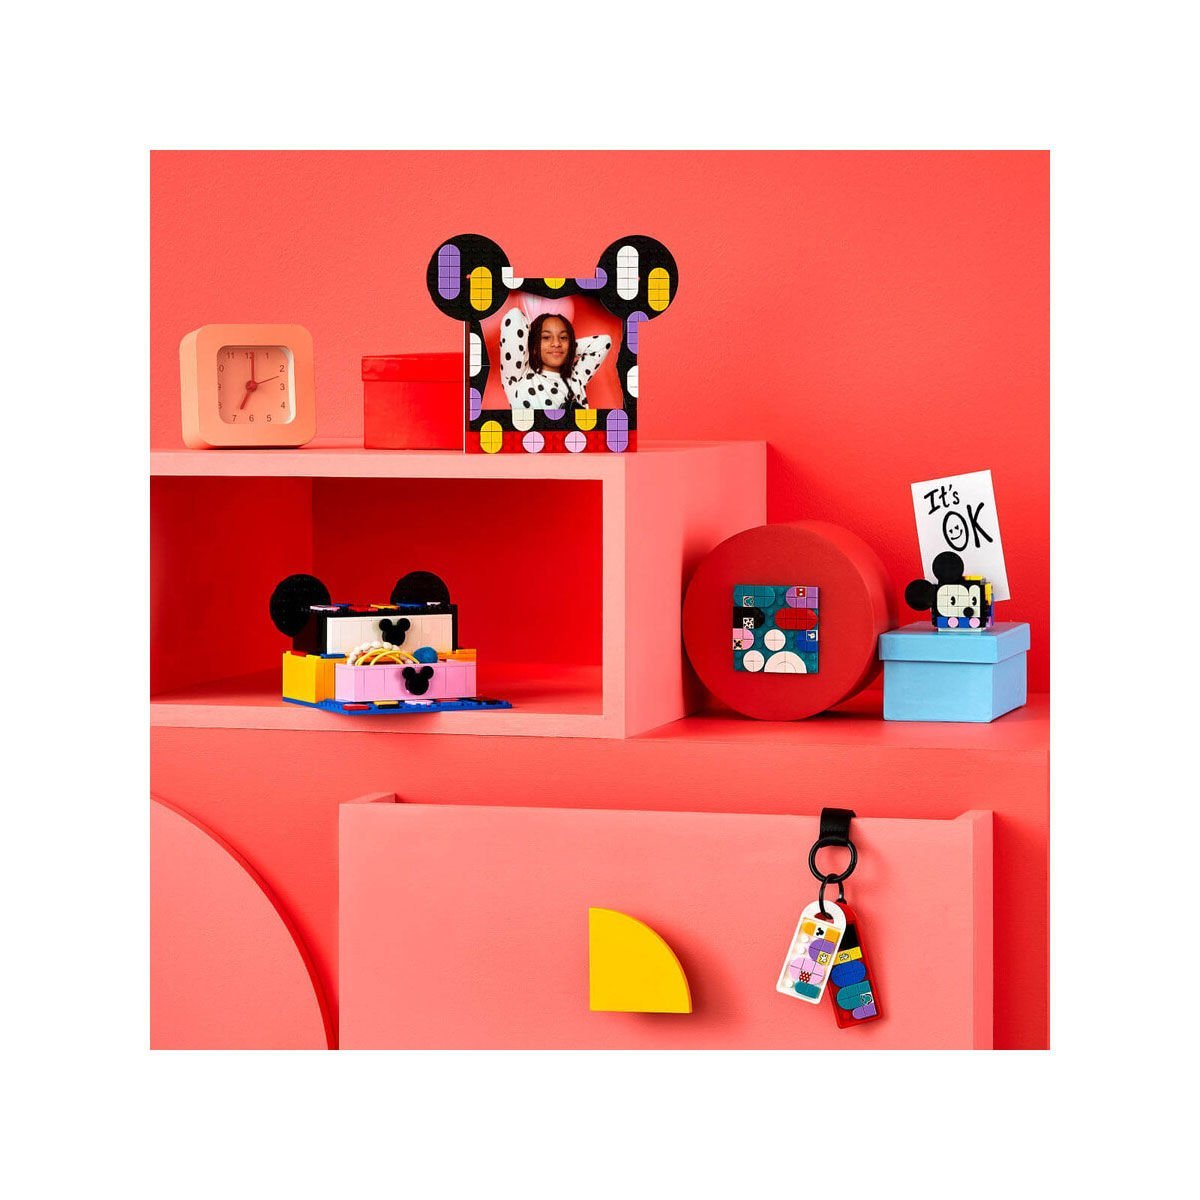 Lego Dots 41964 Mickey ve Minnie Okula Dönüş Projesi Kutusu, 669 parça, +6 yaş